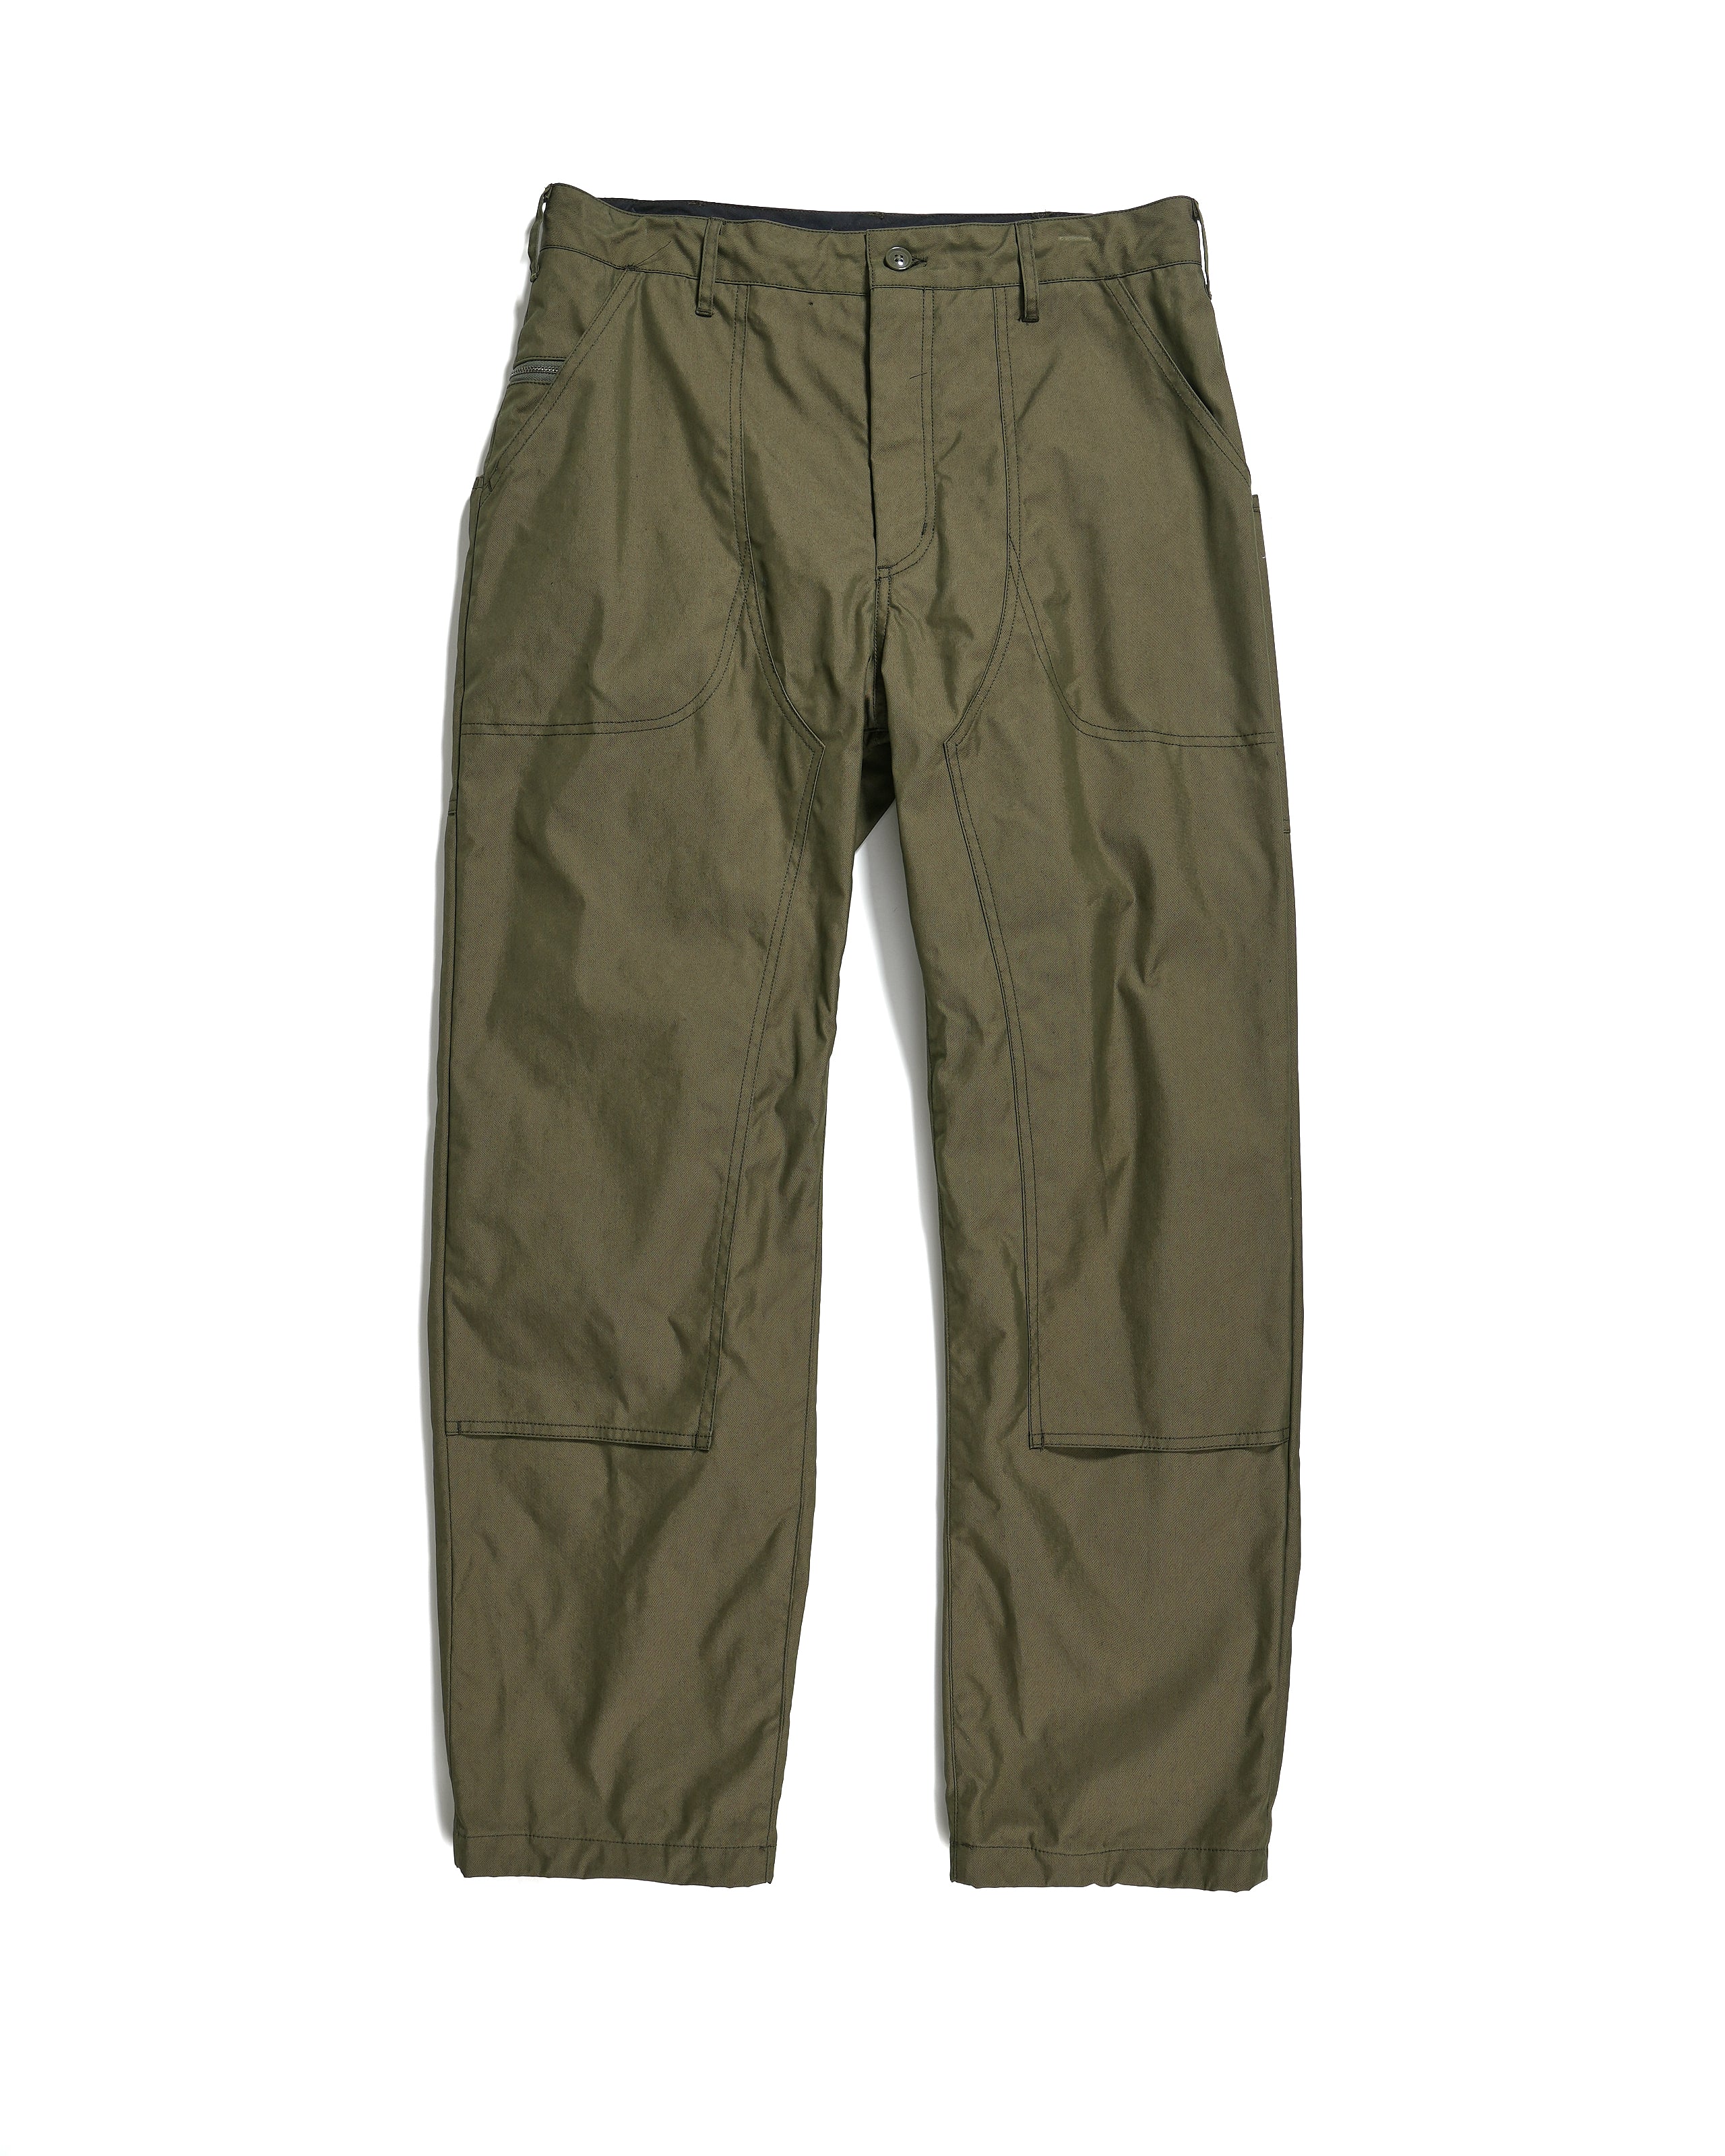 VietClimb - Shopping Time > < E9 Climbing Pants for sale